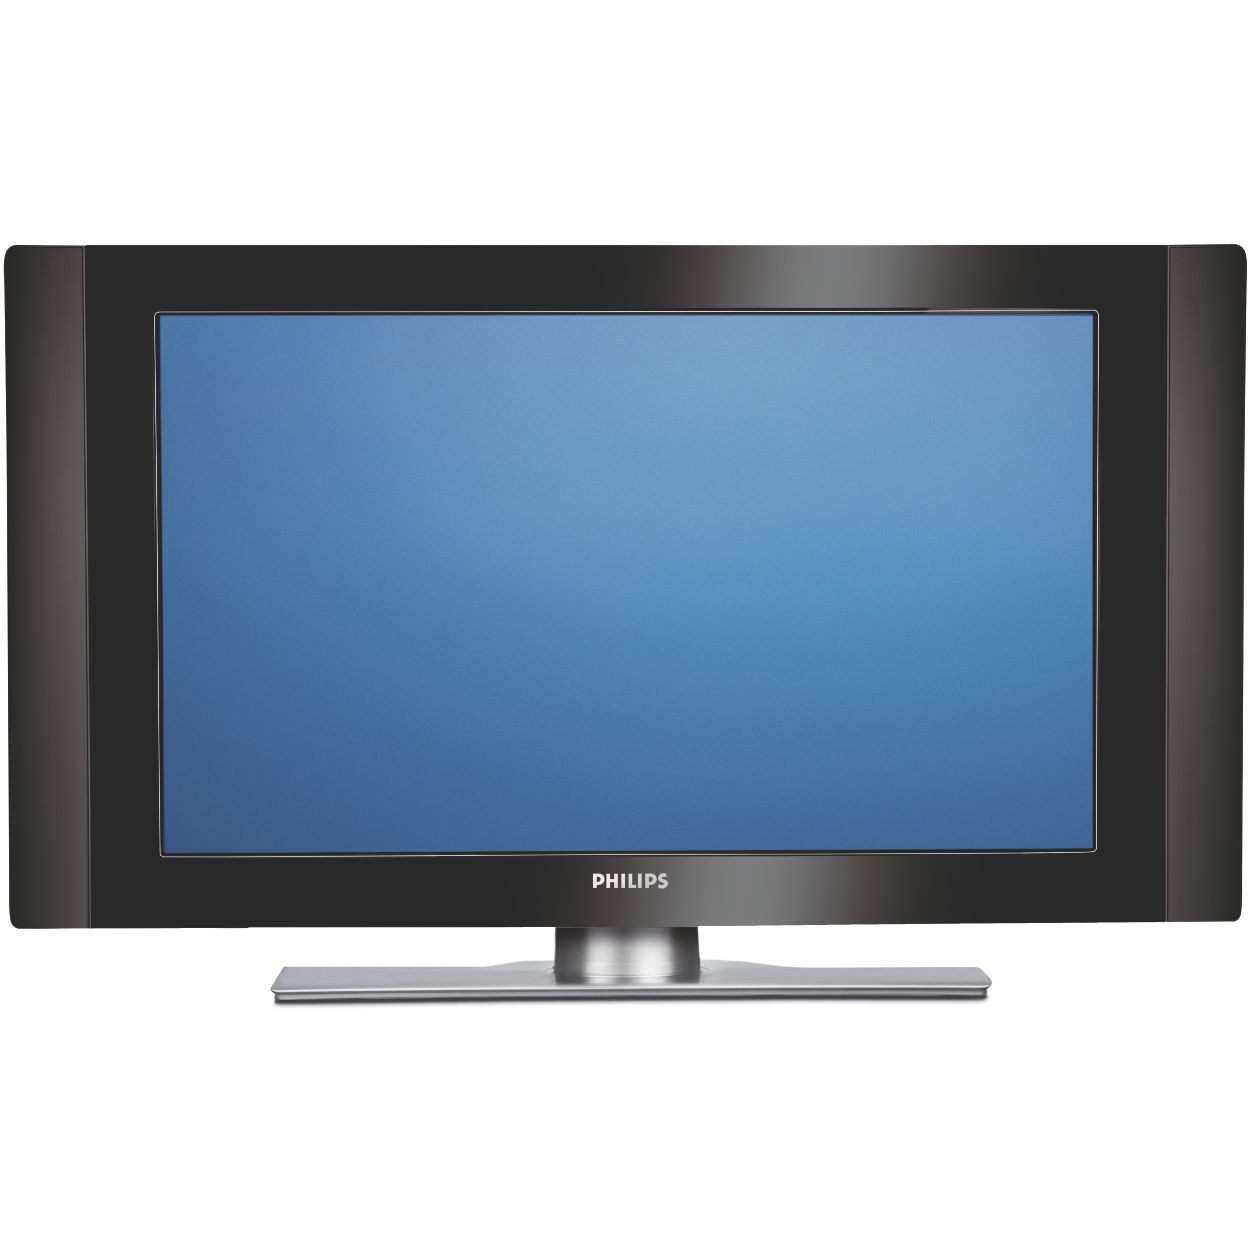 Review: Philips Ambilight 42PF9631D Plasma TV